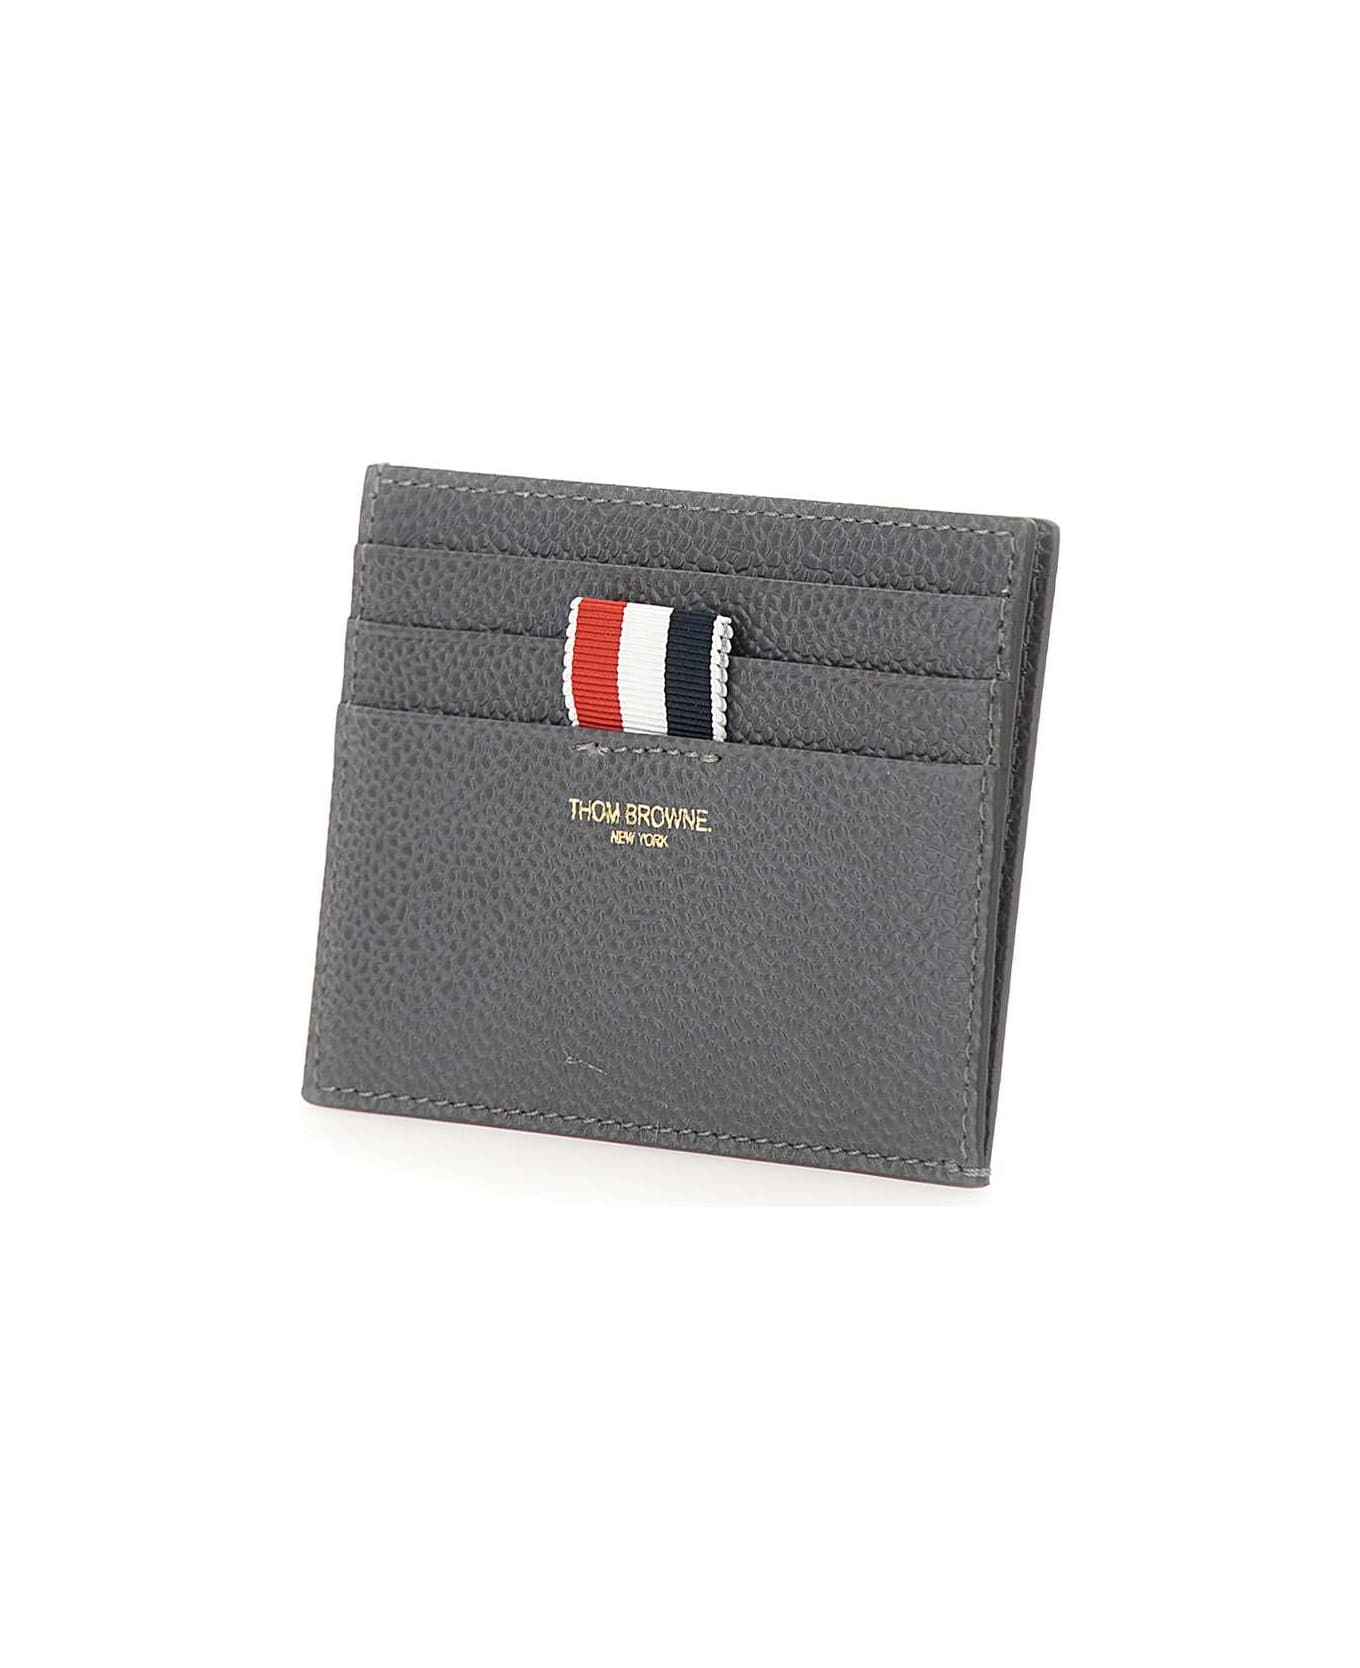 Thom Browne Leather 'card Holder' - GREY